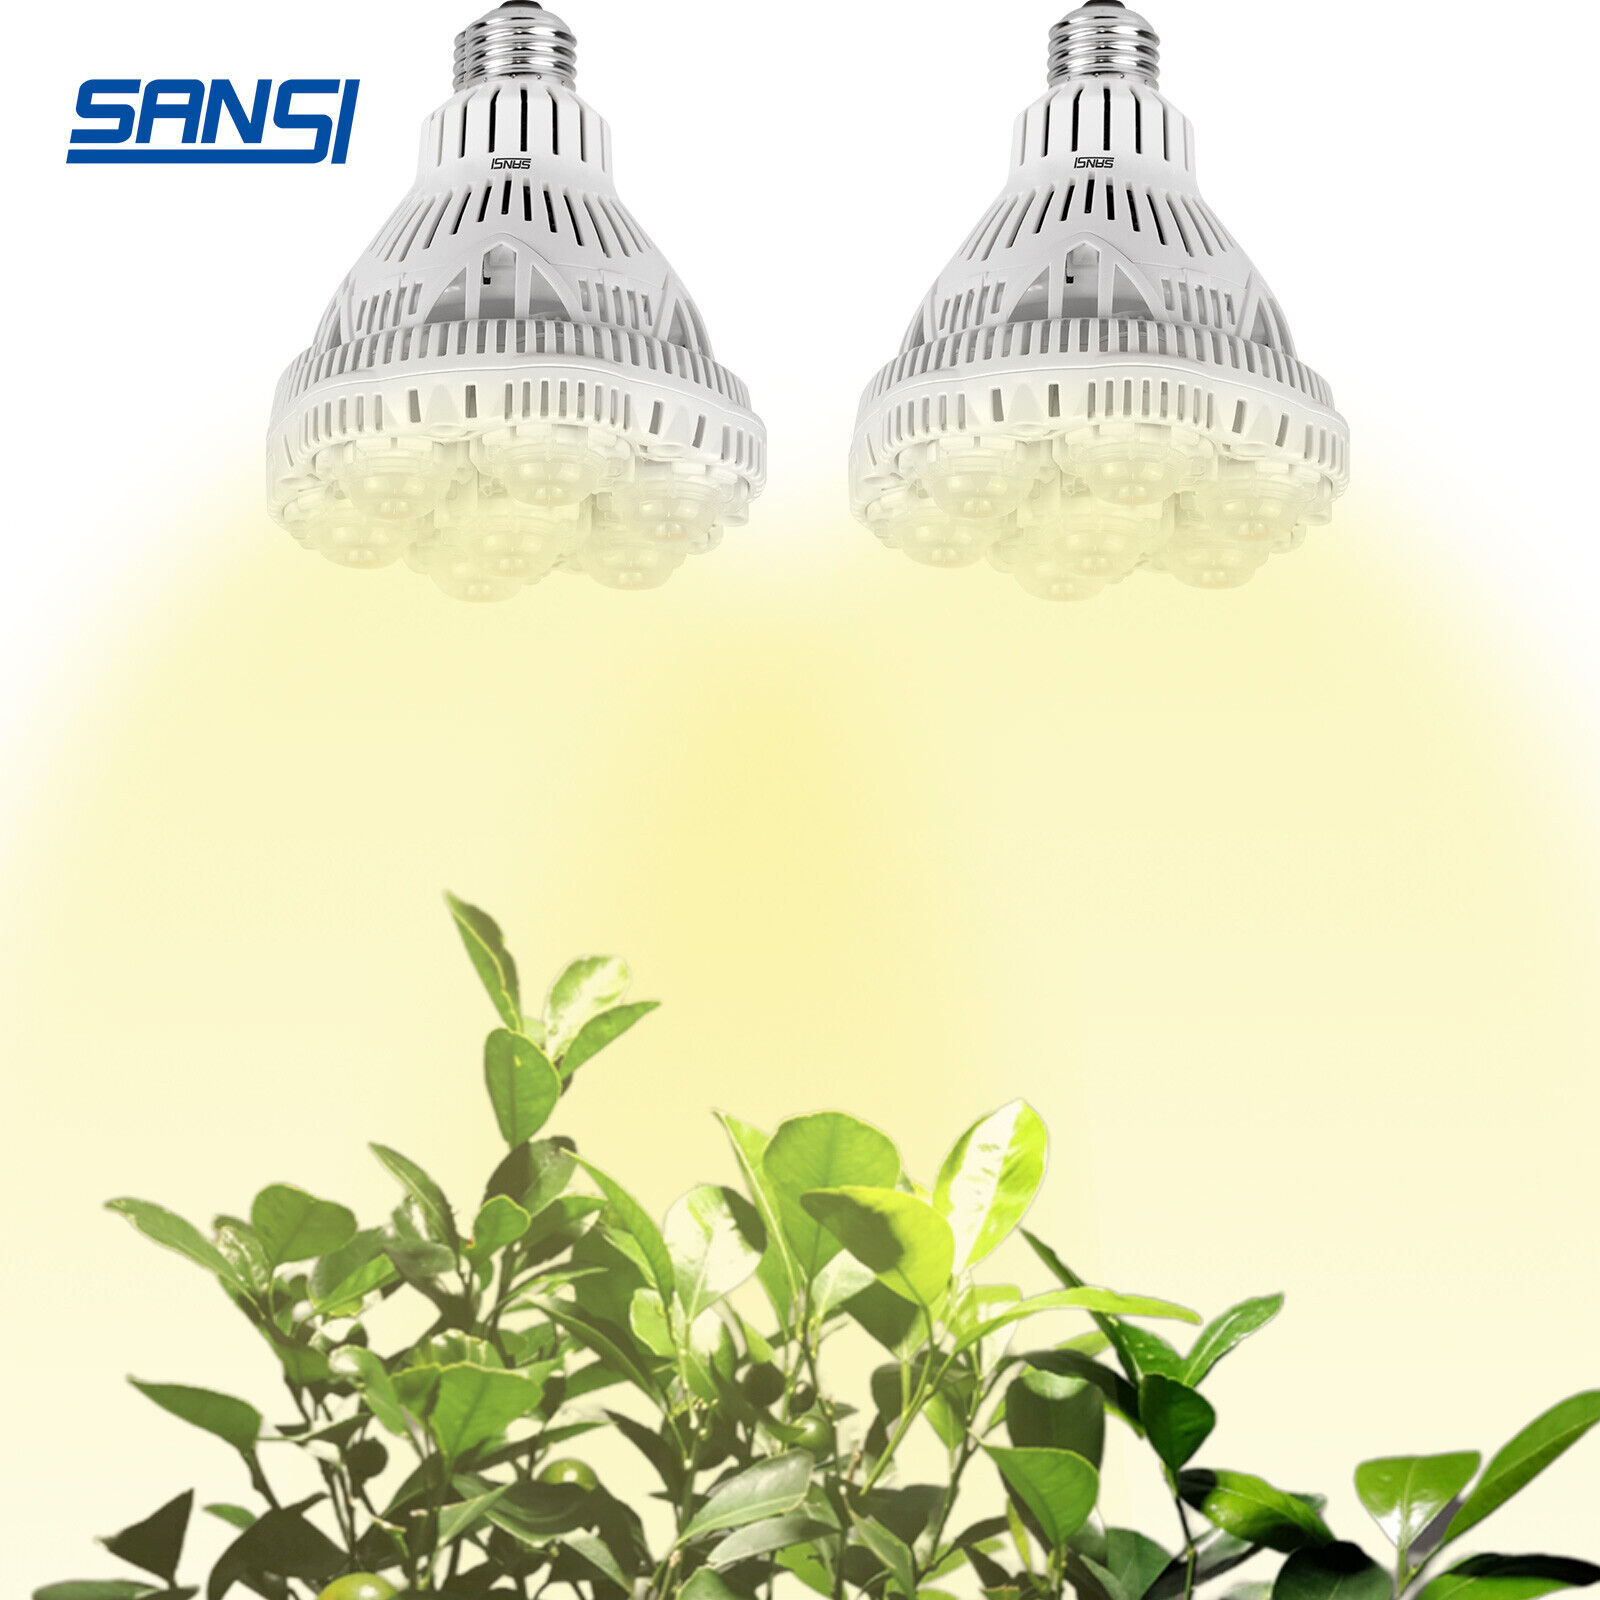 SANSI 400W Full Spectrum LED Grow Light Bulb Indoor Seeding Plant 36W 2 Pack COC